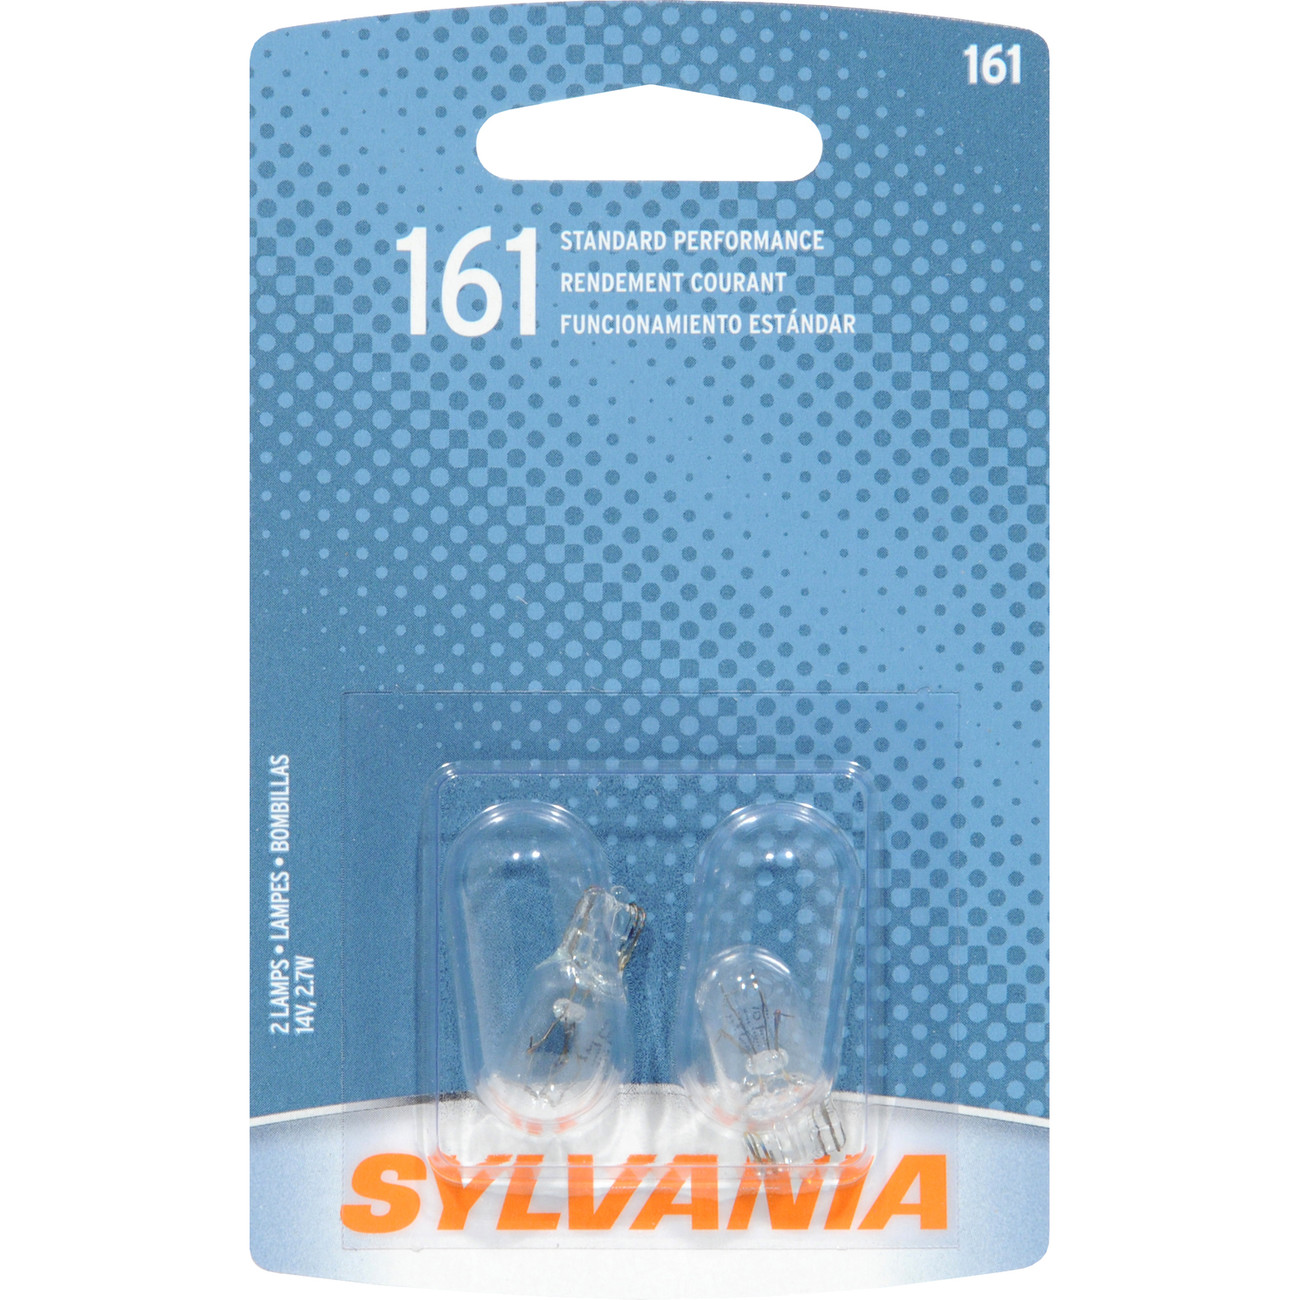 SYLVANIA RETAIL PACKS - Blister Pack Twin Auto Trans Indicator Light Bulb - SYR 161.BP2